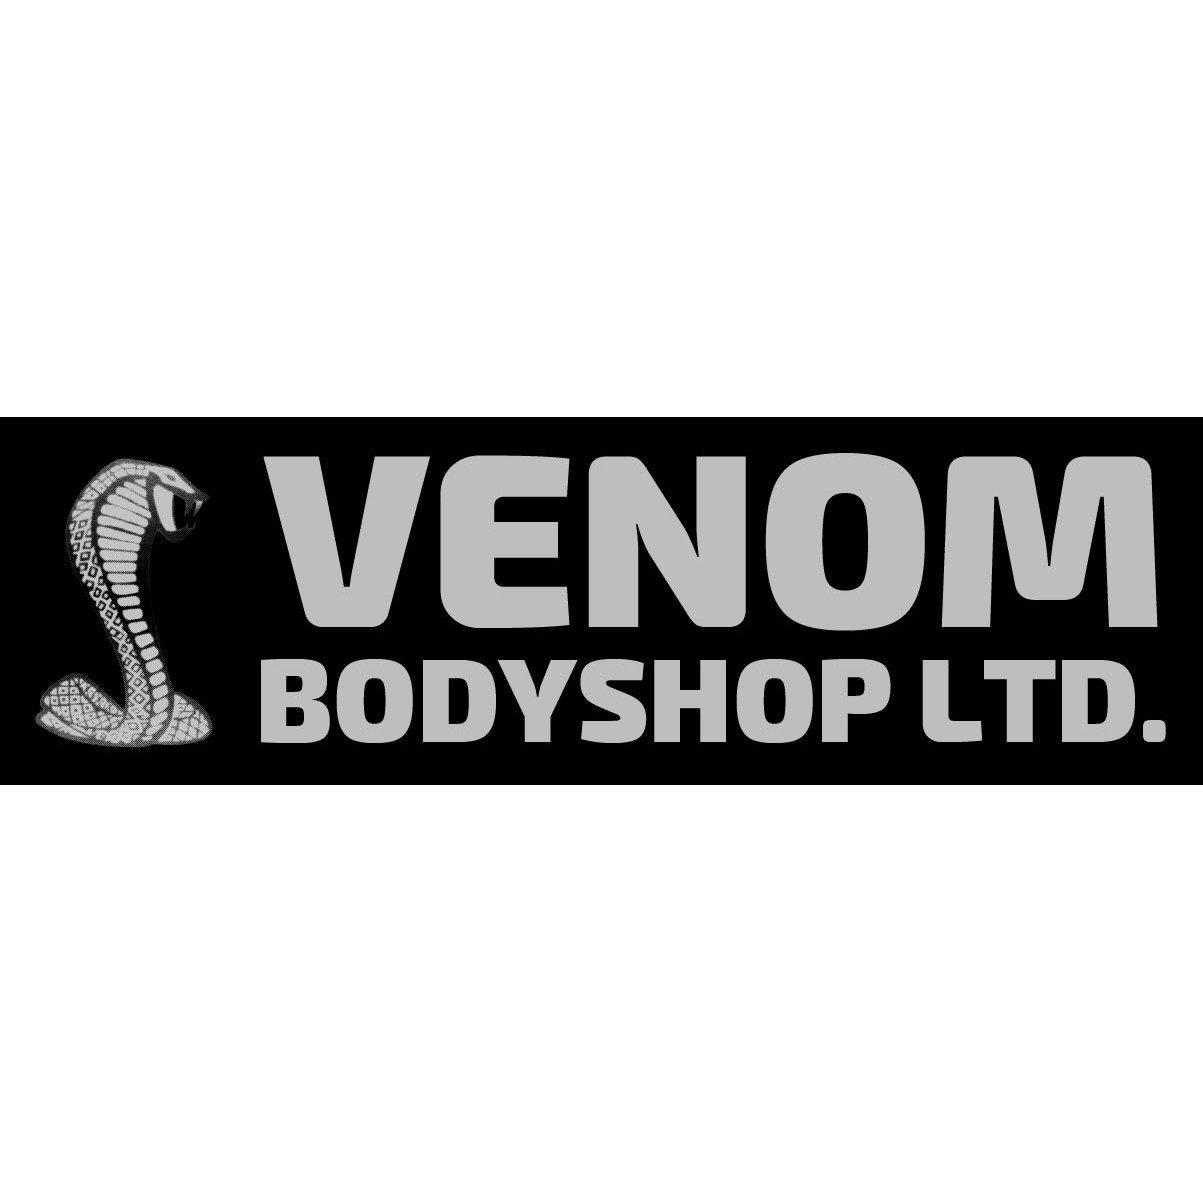 Venom Body Shop Ltd - London, London E11 1HD - 020 8539 2741 | ShowMeLocal.com